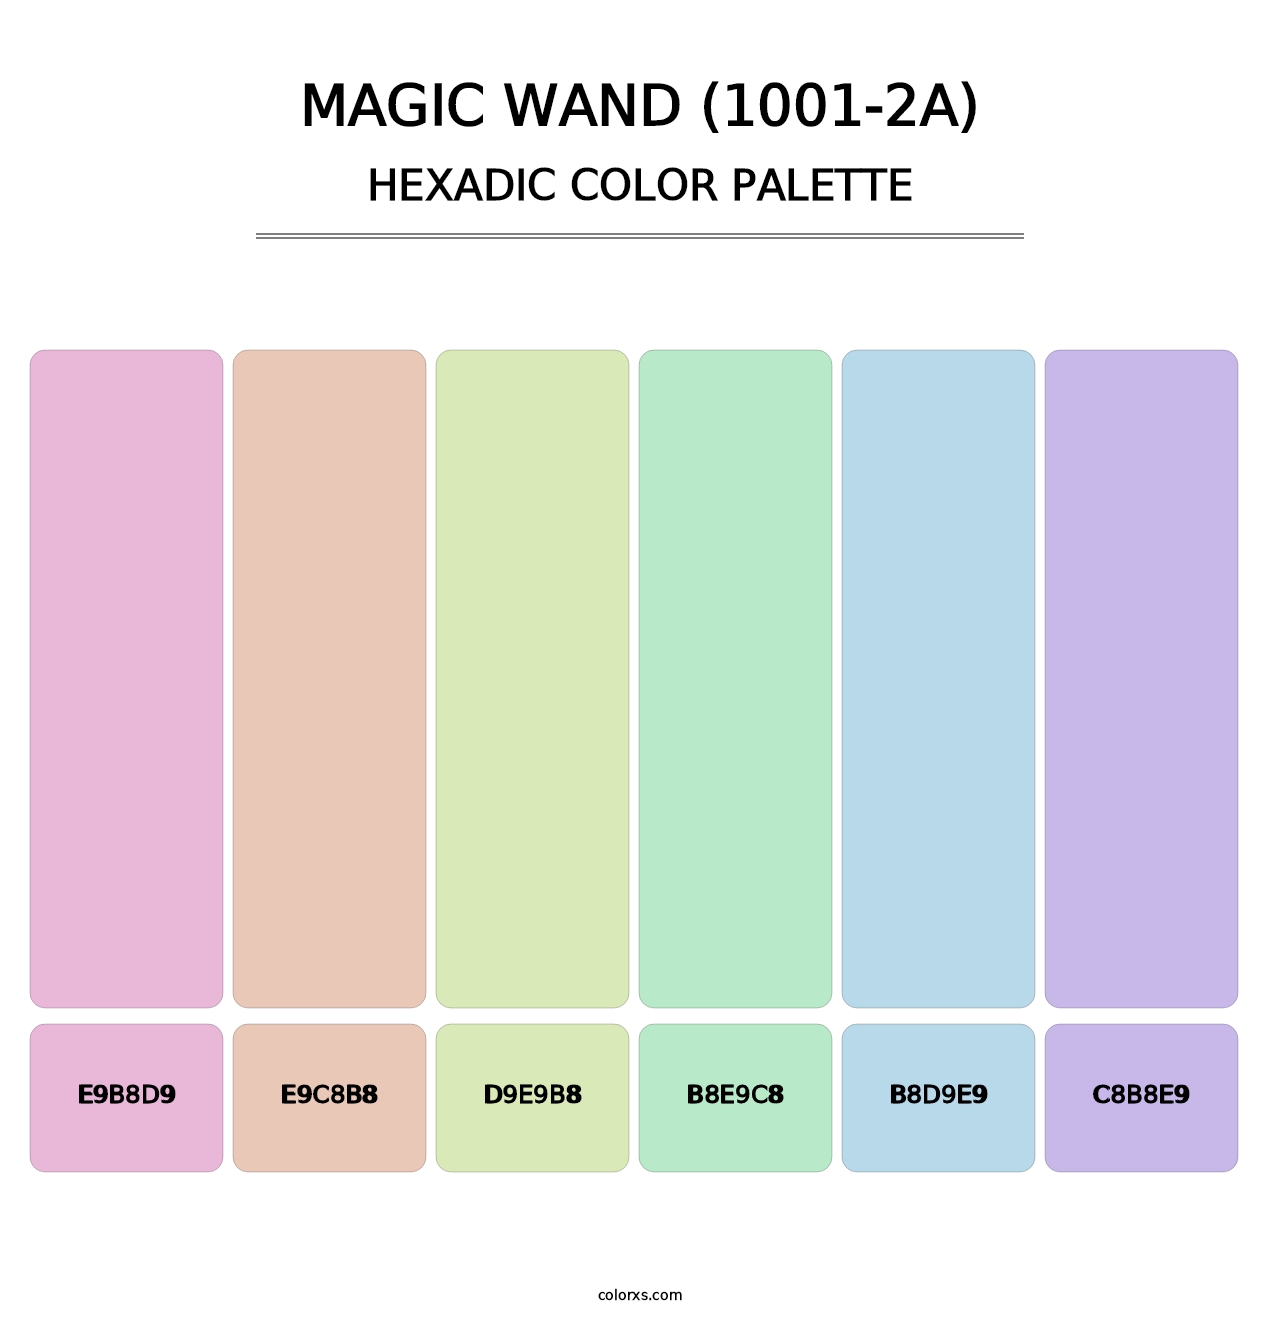 Magic Wand (1001-2A) - Hexadic Color Palette